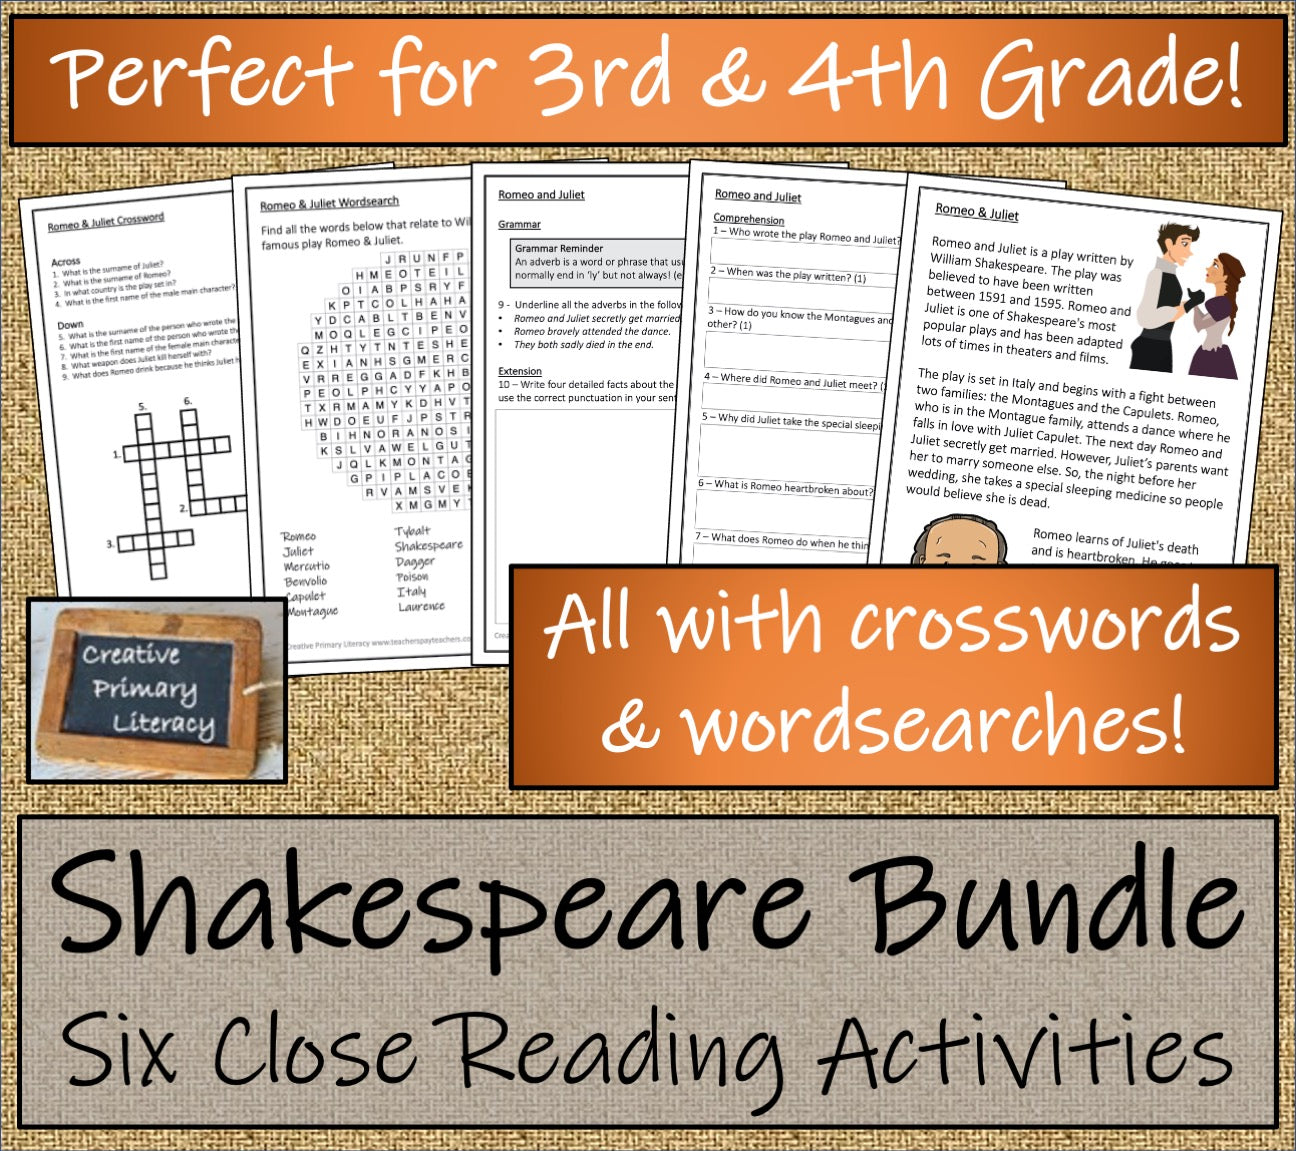 William Shakespeare Mega Bundle of Play Scripts & Activities | 3rd & 4th Grade